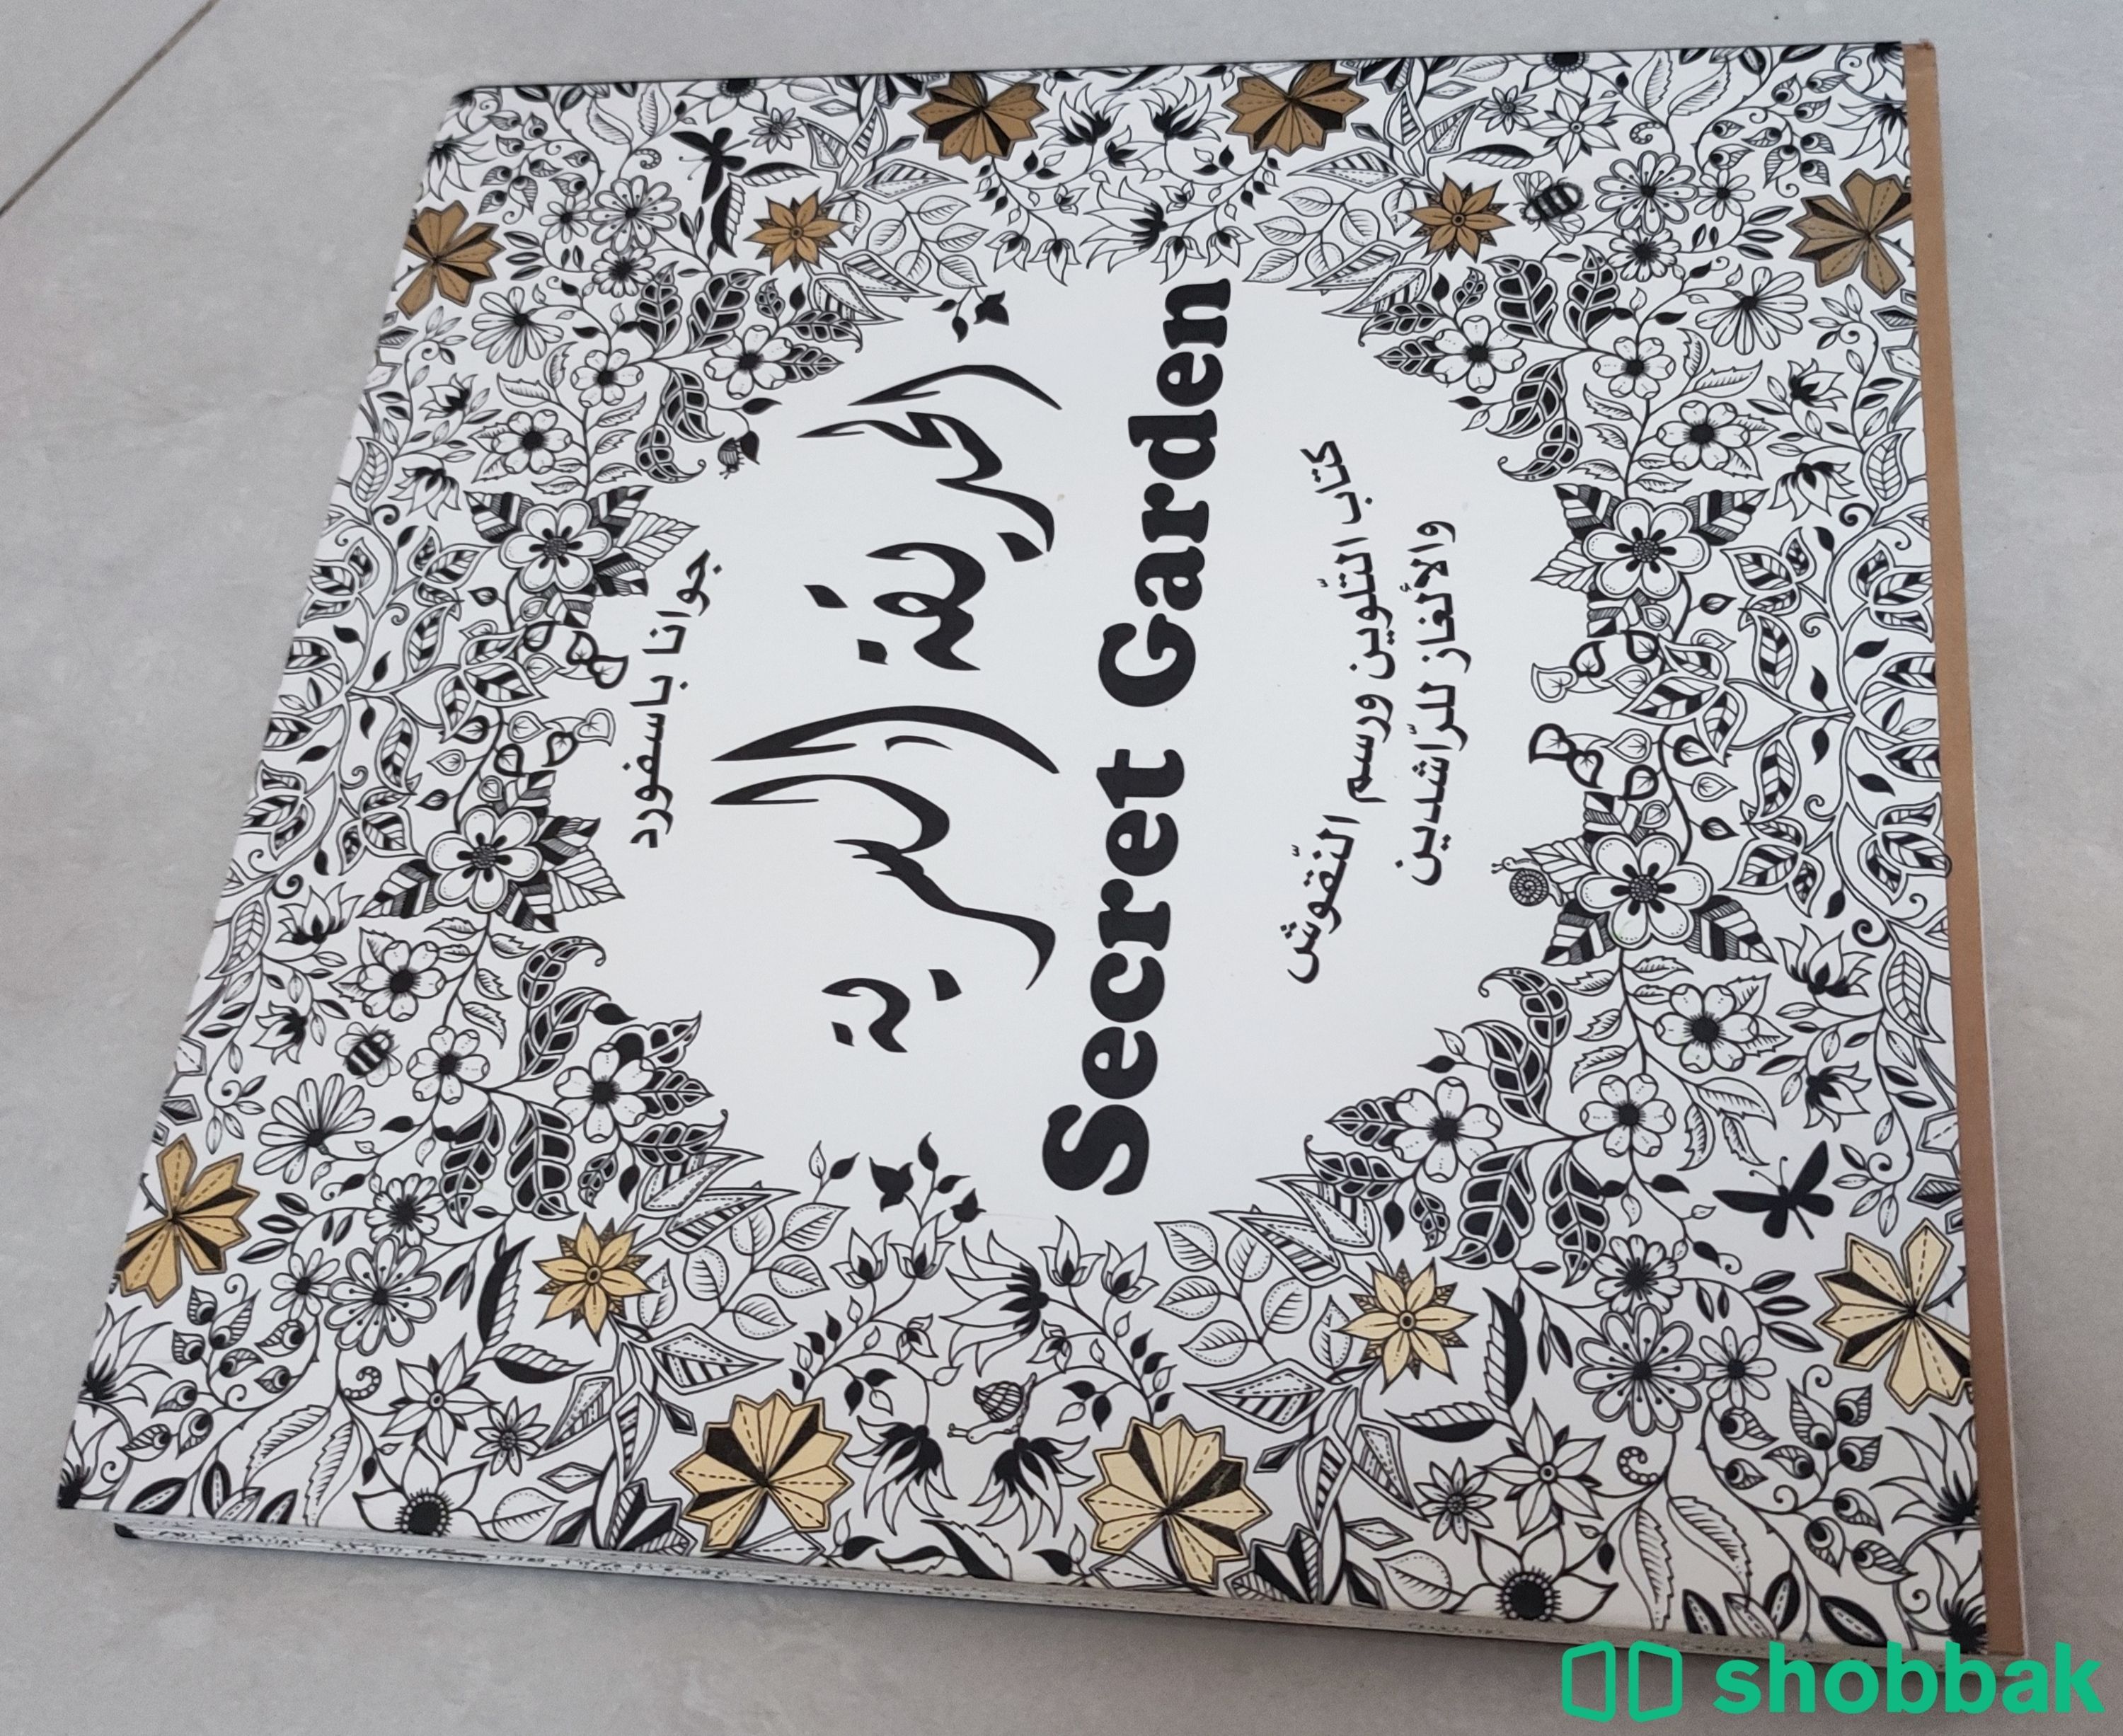 كتاب تلوين للكبار Shobbak Saudi Arabia